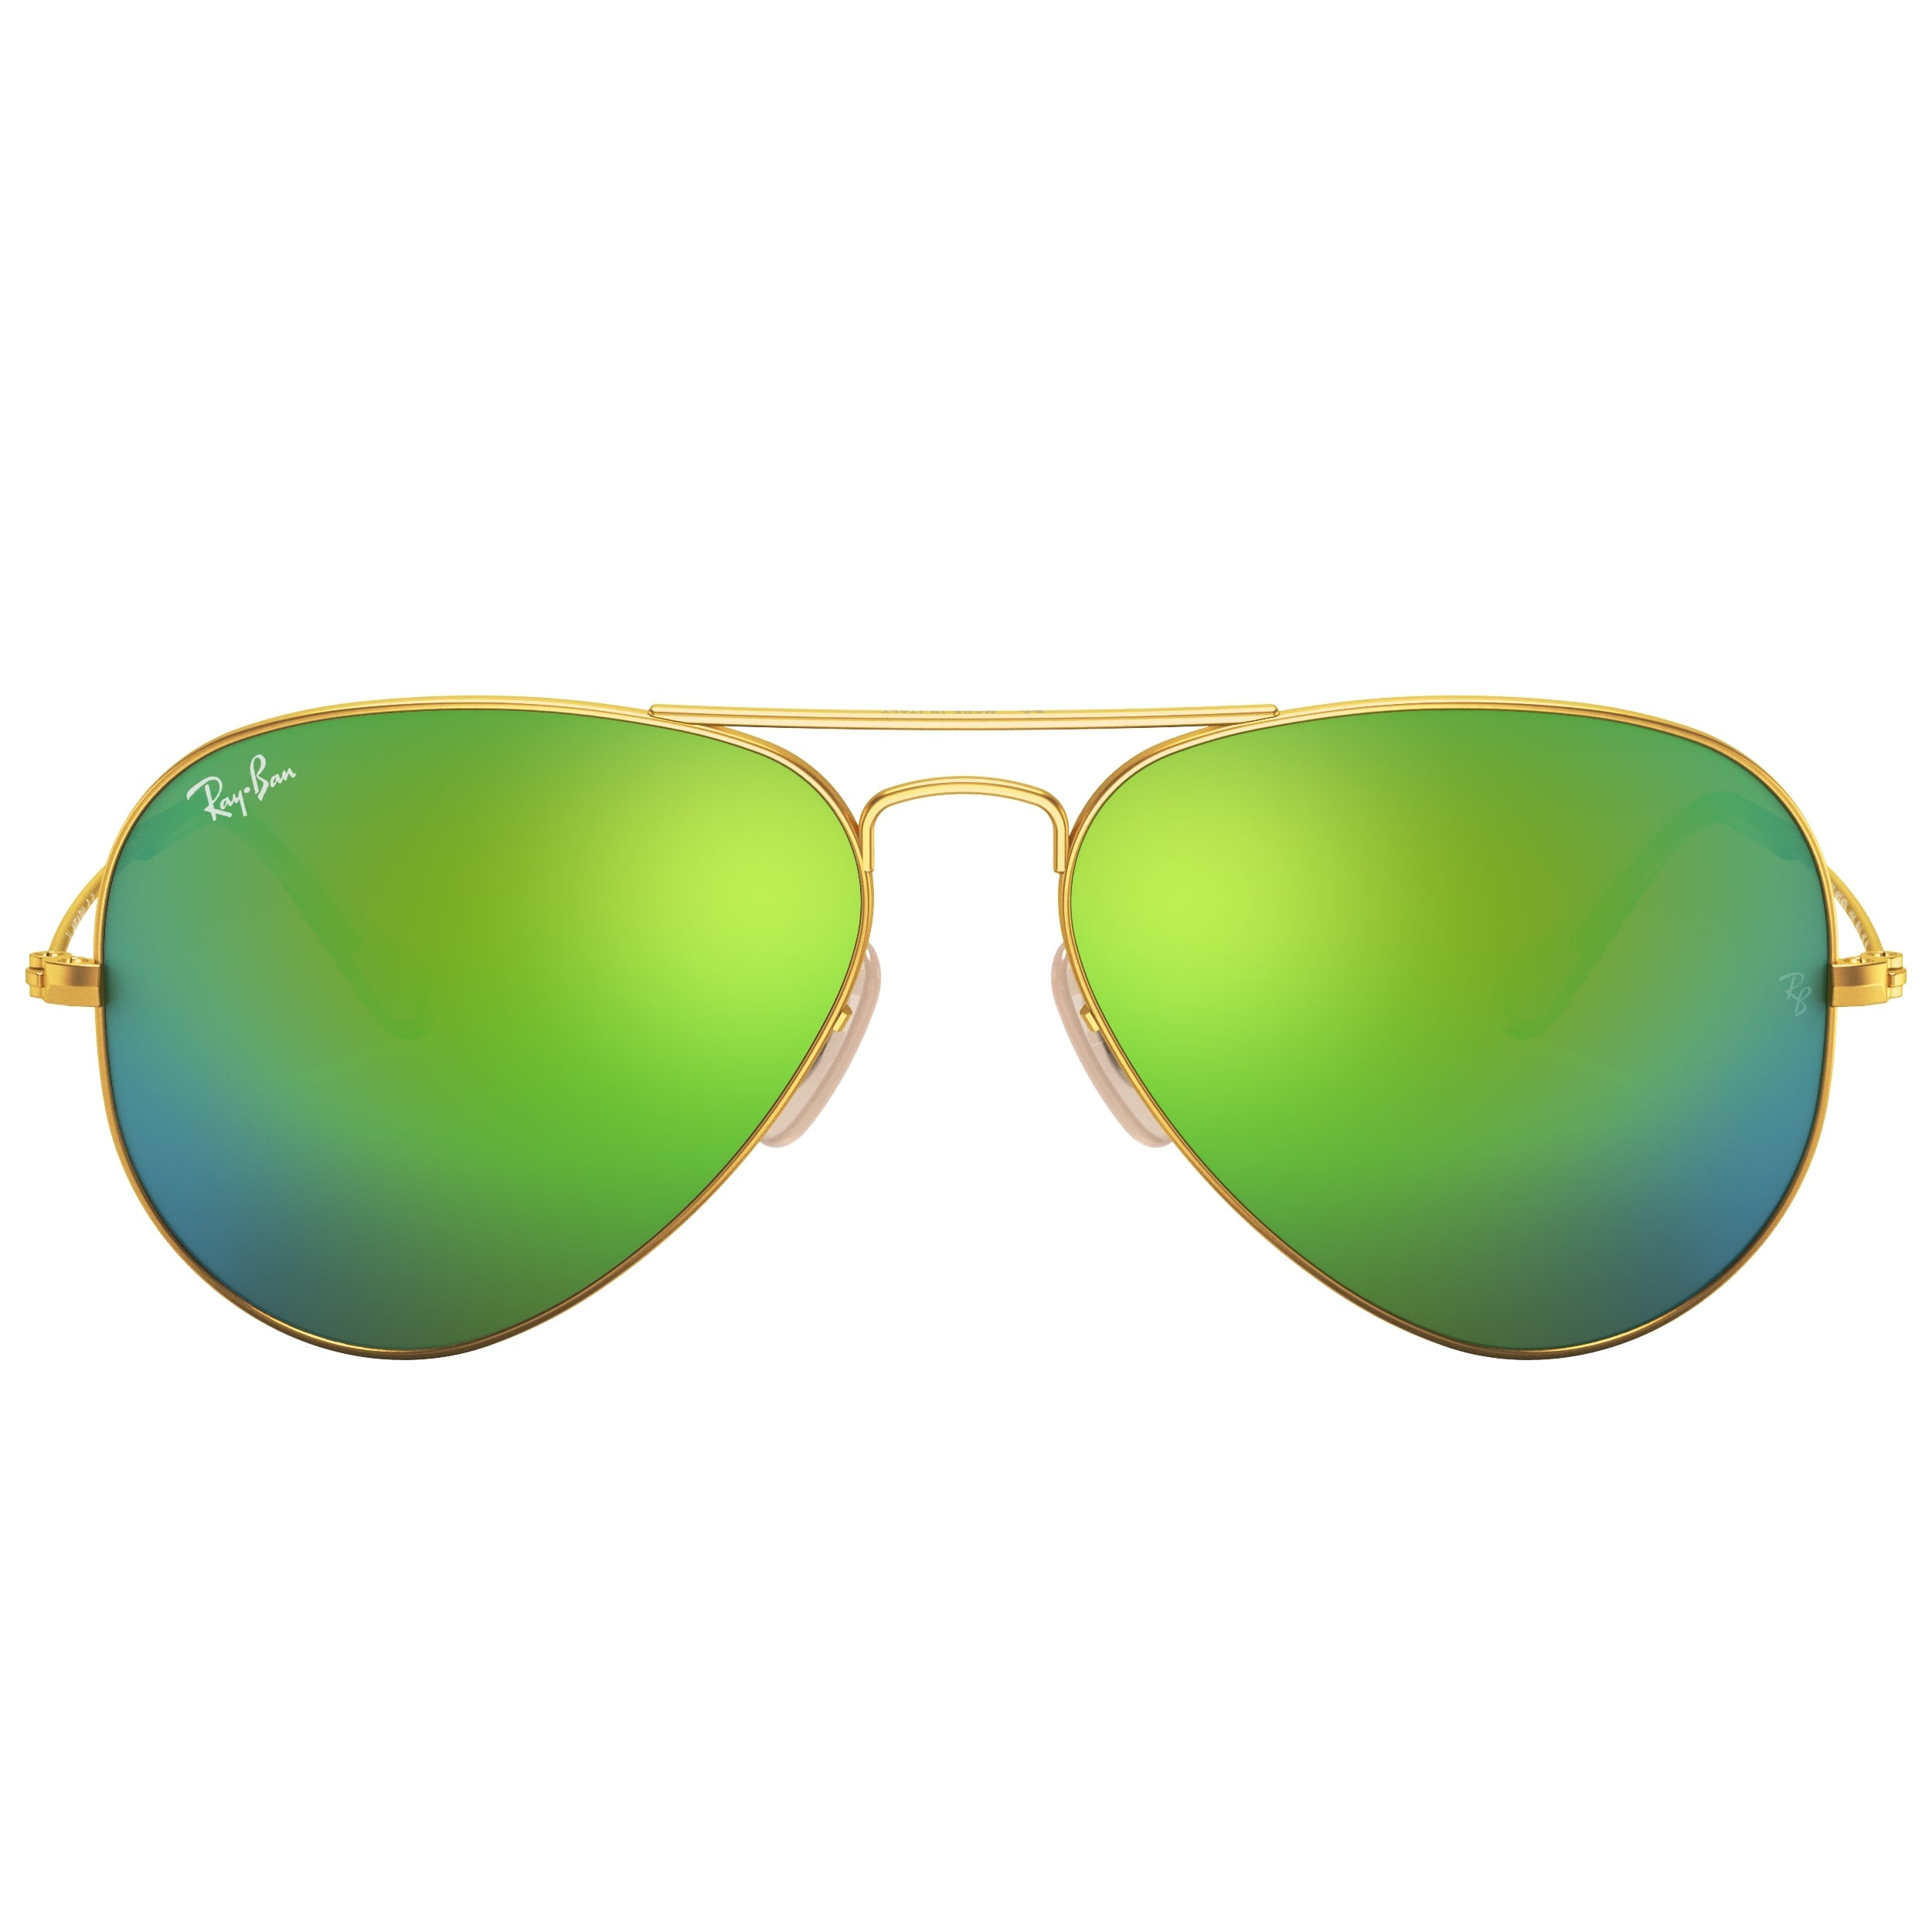 Ray-Ban Aviator Flash Lenses Green Flash Flash Aviator/Pilot Men's Sunglasses RB3025 112/19 58